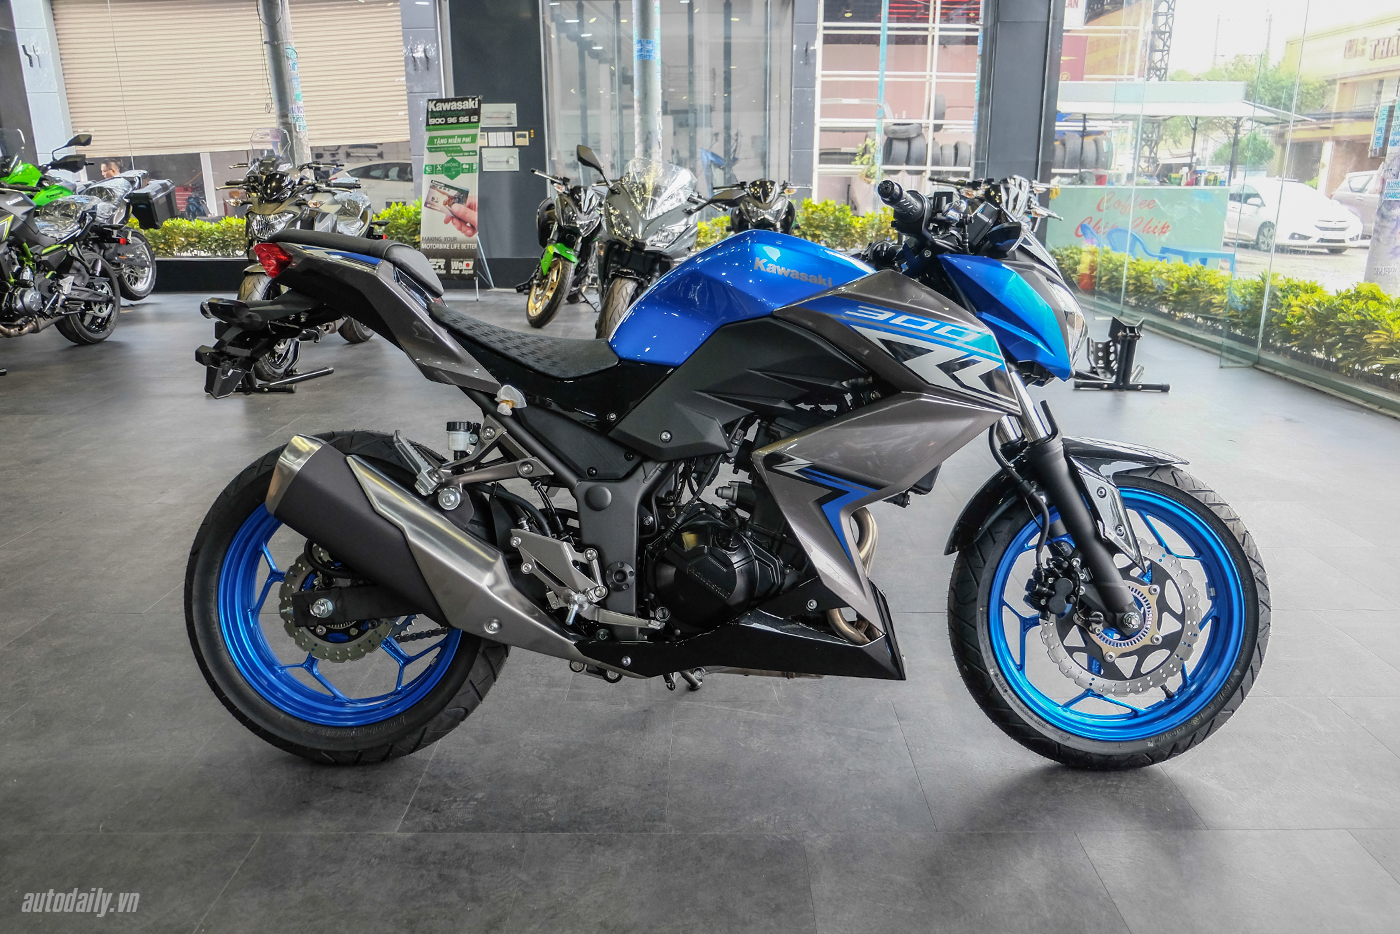 Chọn Yamaha FZ-25 ABS 2019 hay Kawasaki Z300 ABS 2018?